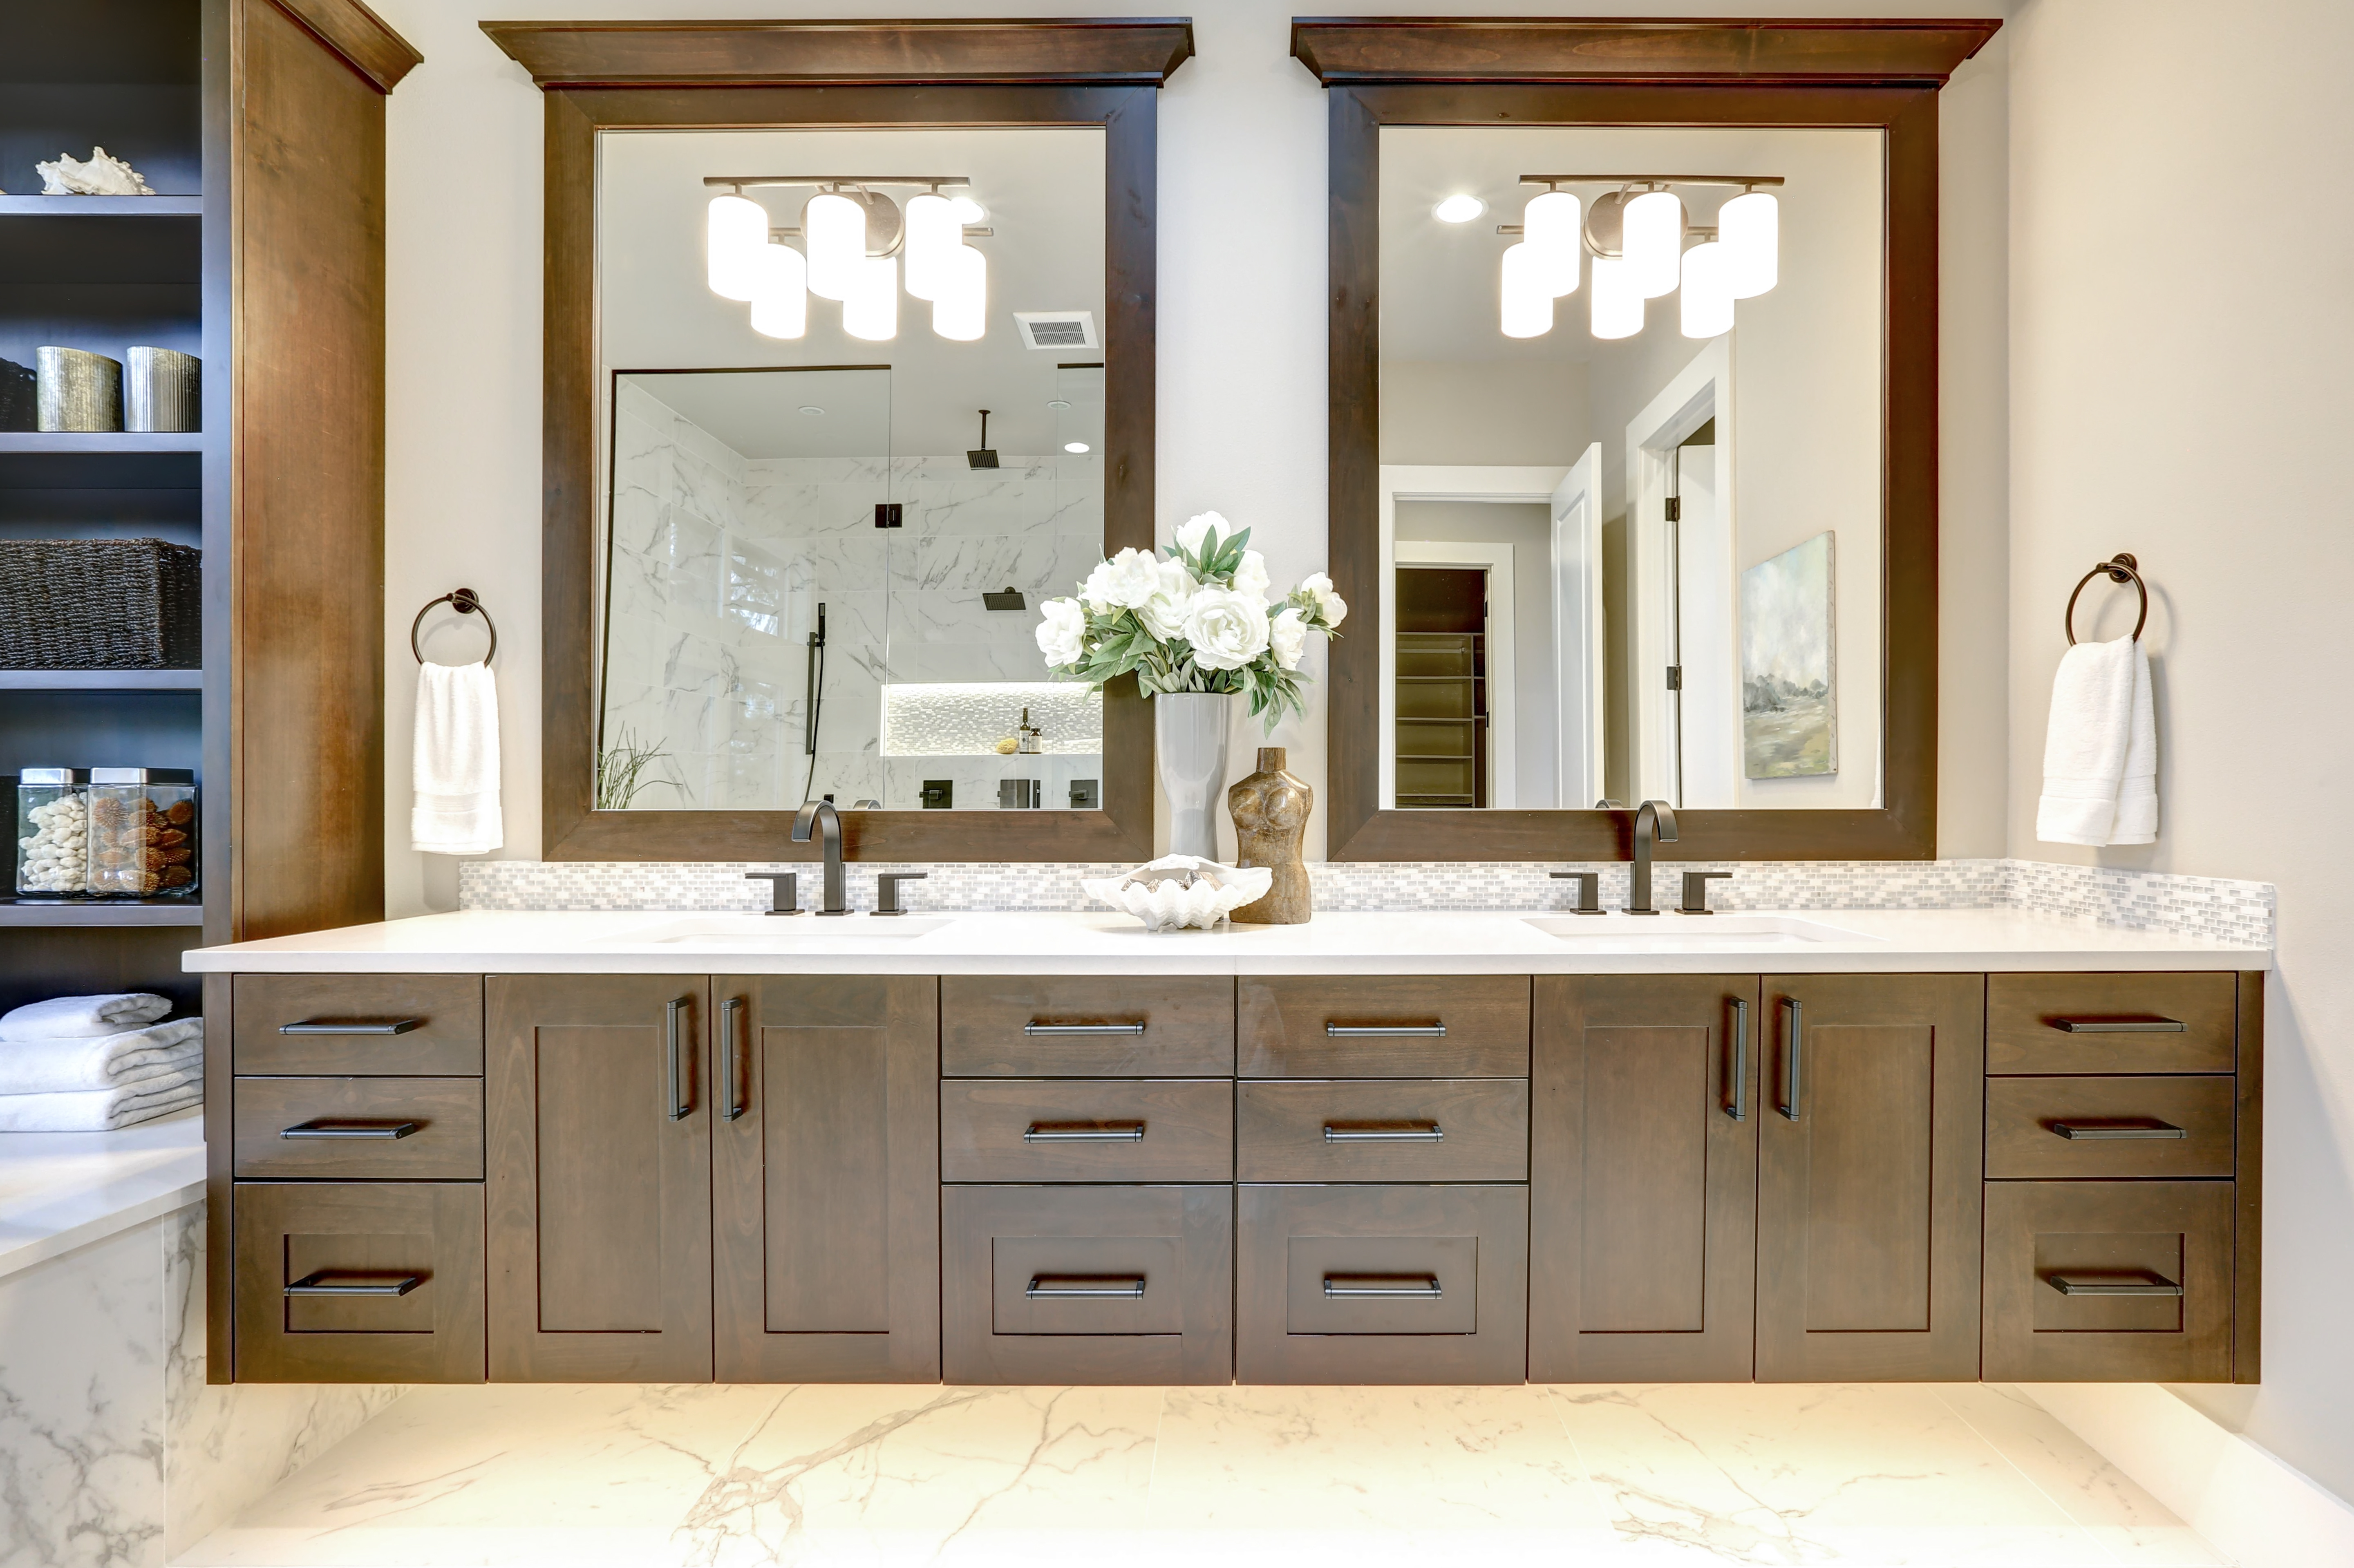 master_bathroom_interior_in_luxury_modern_home_with_dark_hardwood_cabinets_white_tub_and_glass_door_shower